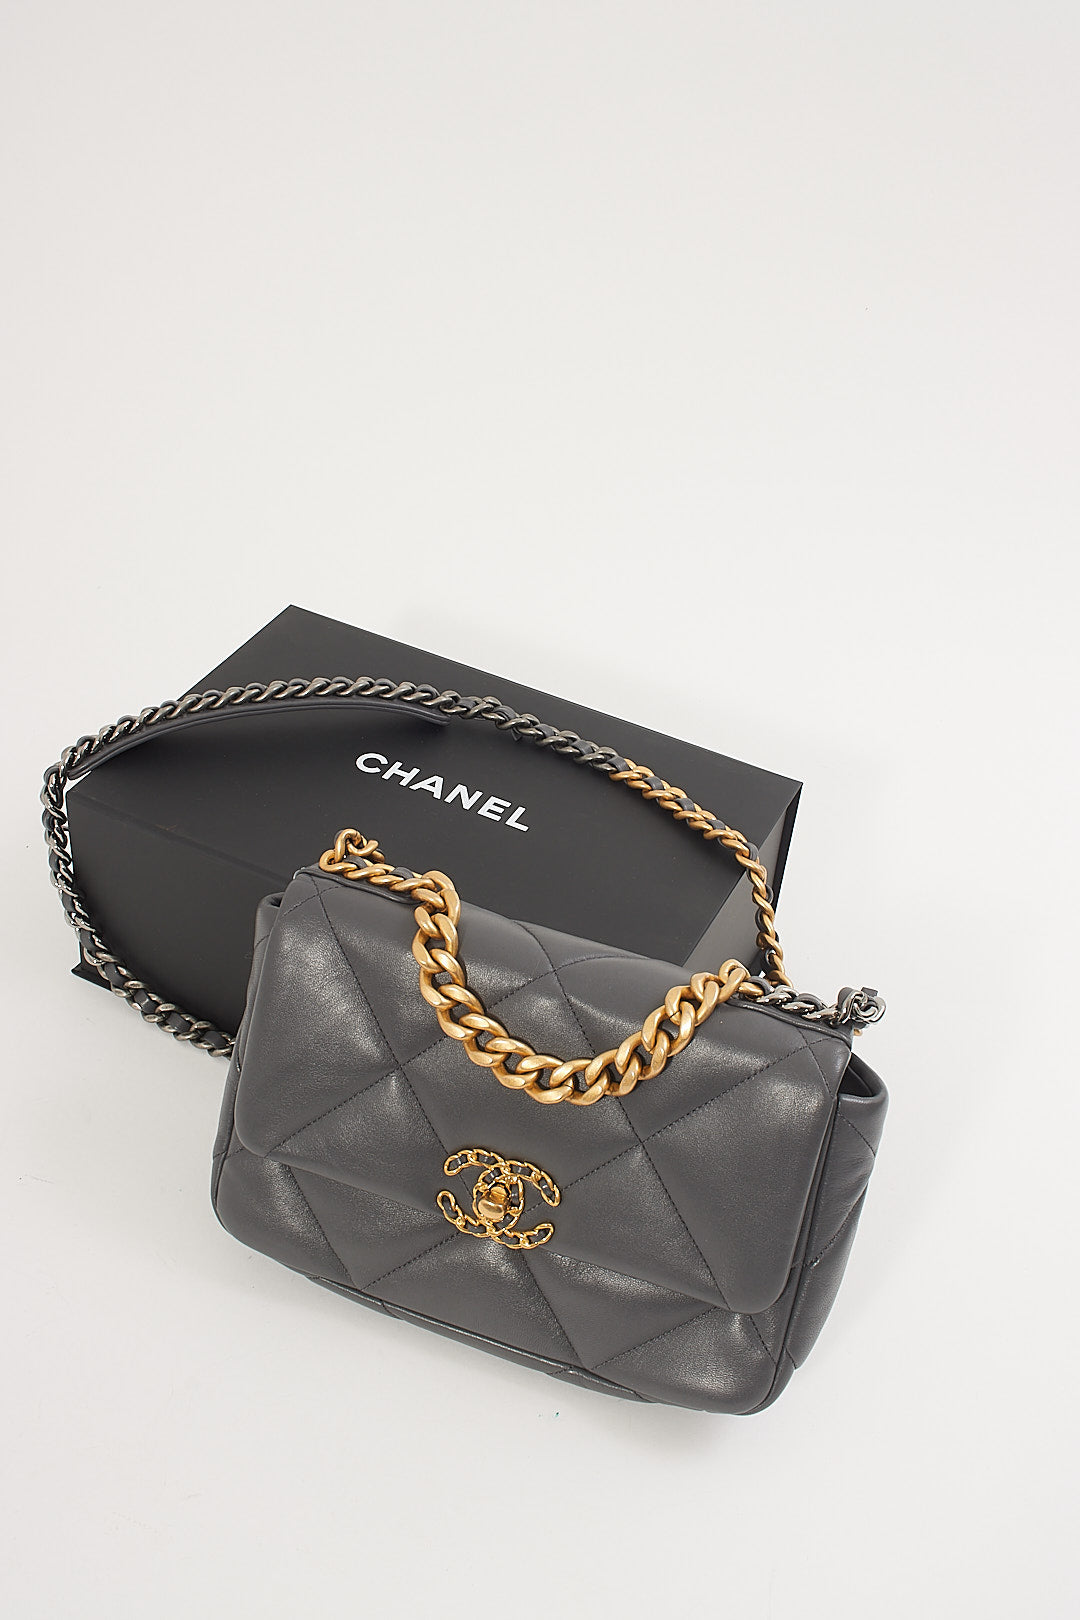 Chanel Grey Lambskin Leather Medium 19 Flap Chain Bag